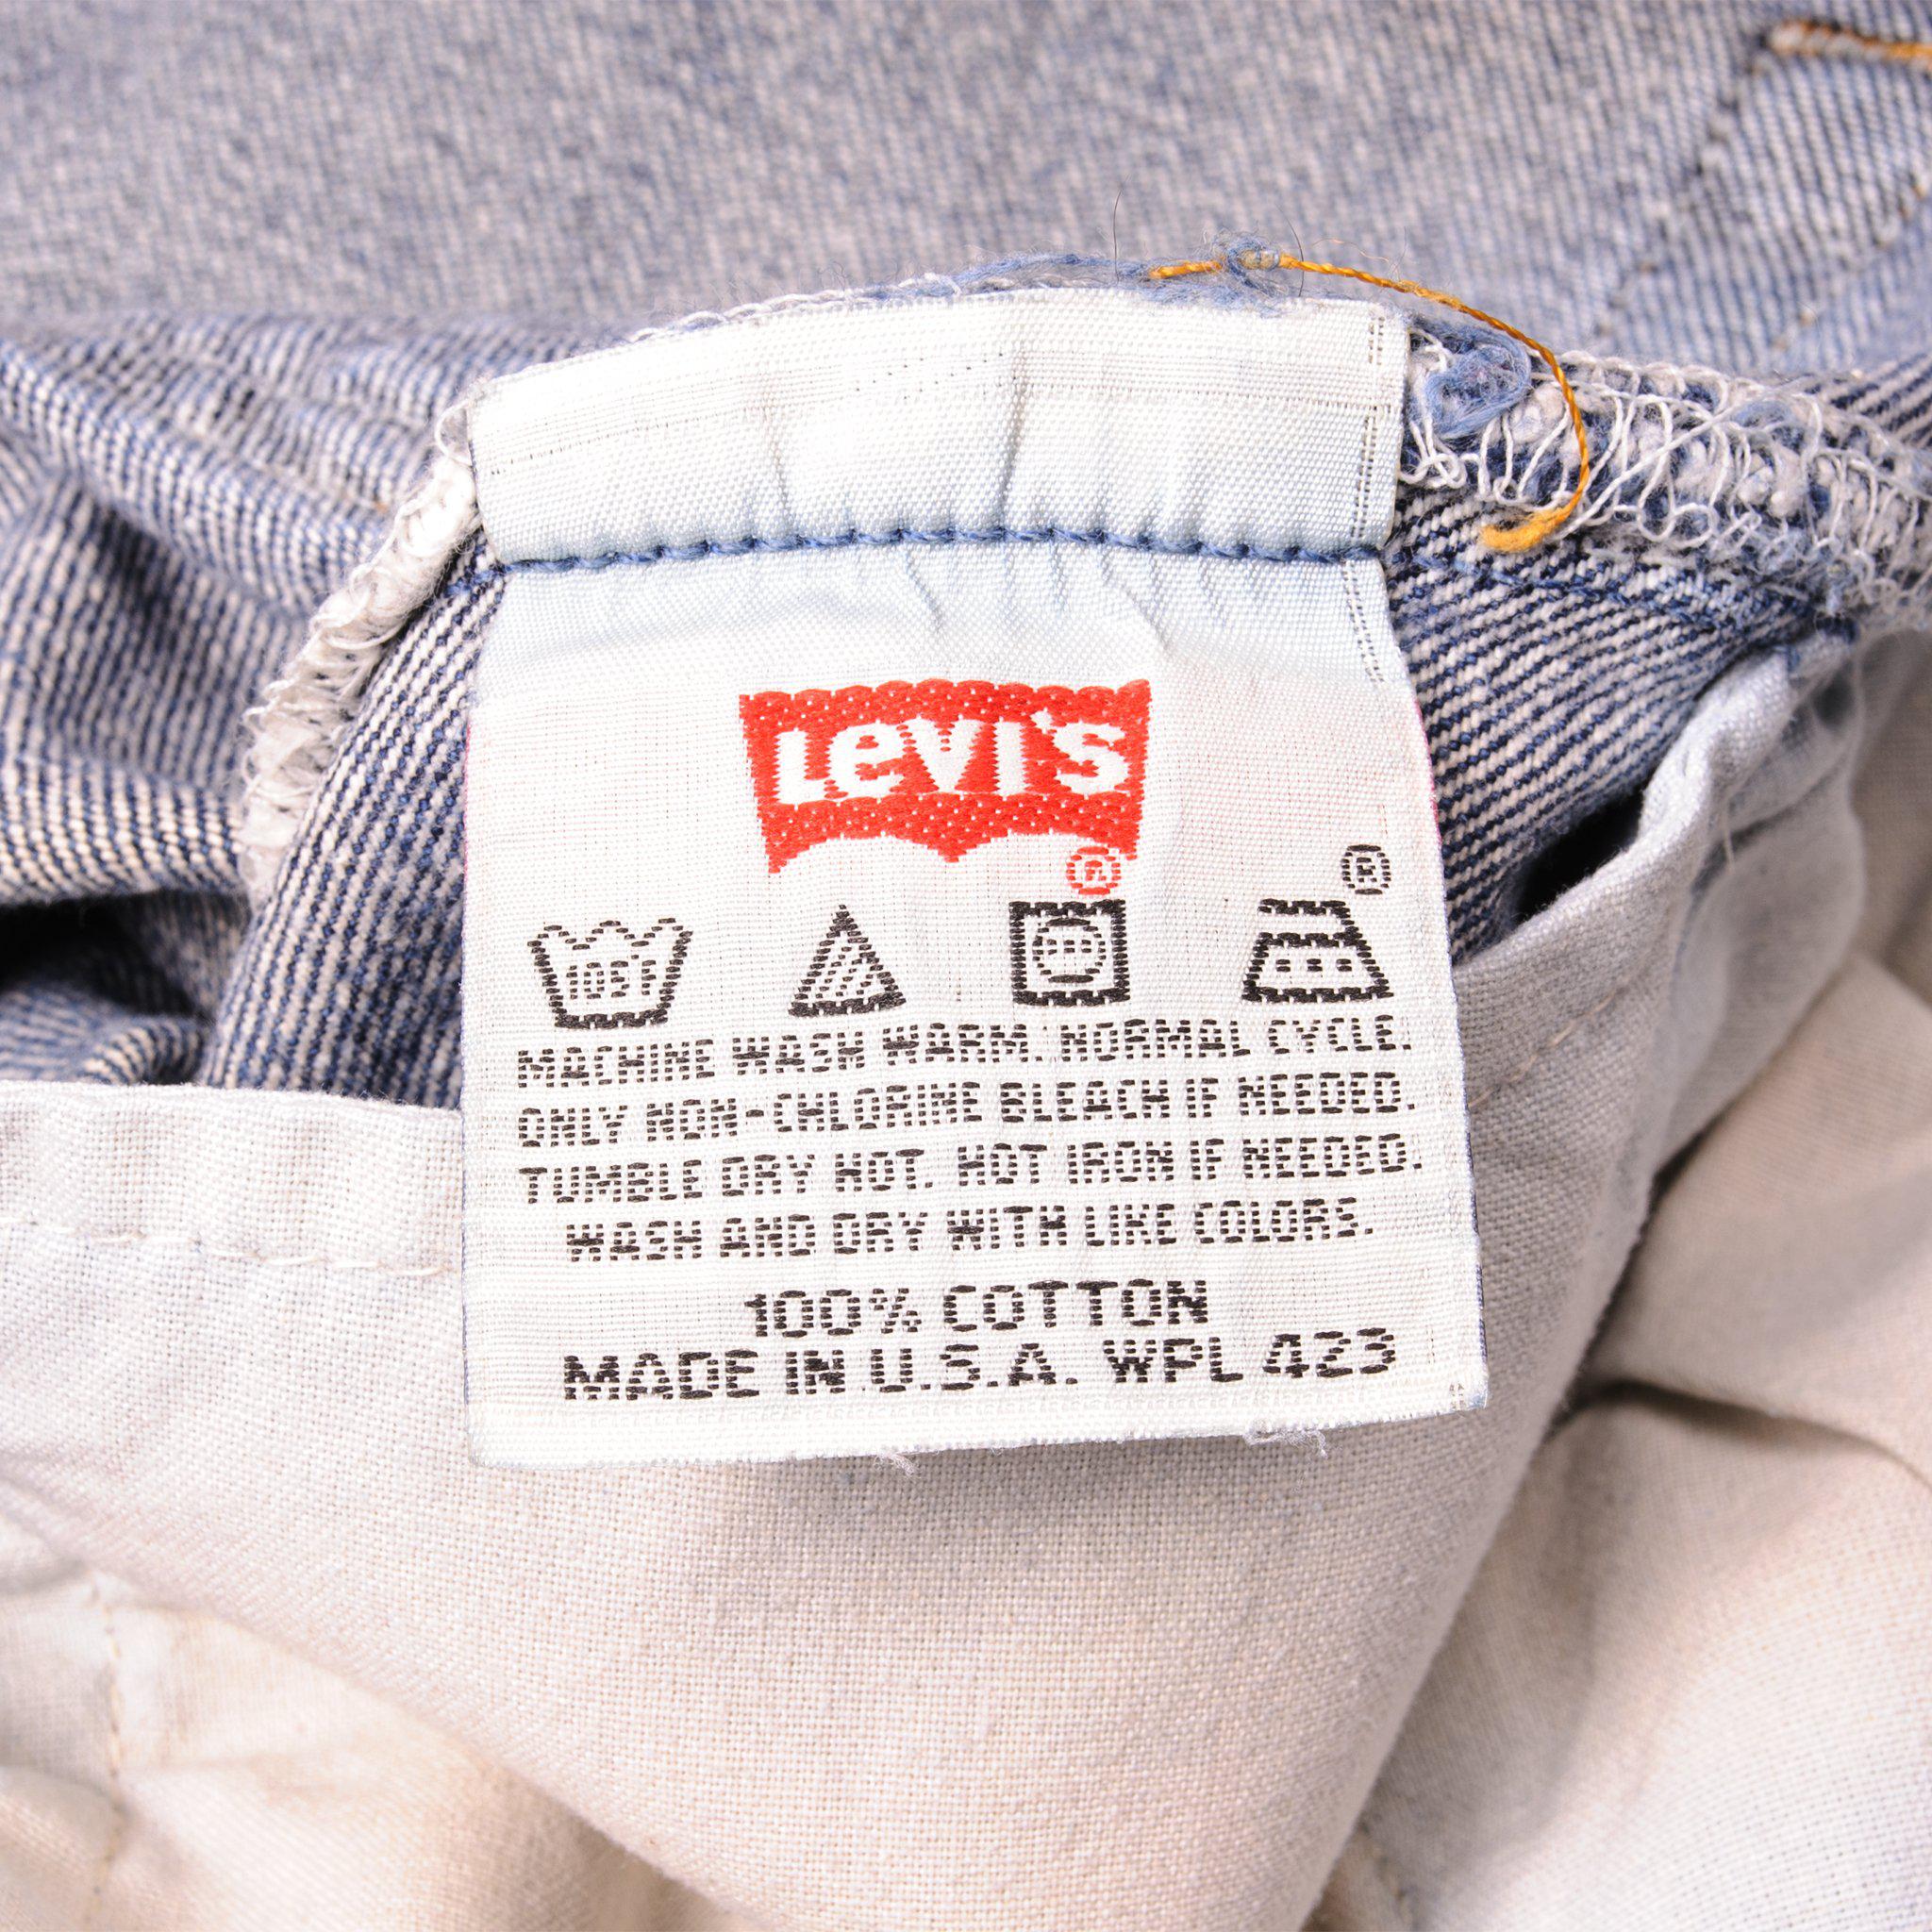  Levi's® Vintage 1955 501 Jeans Dark Indigo Organic 1955 28 32 :  Clothing, Shoes & Jewelry